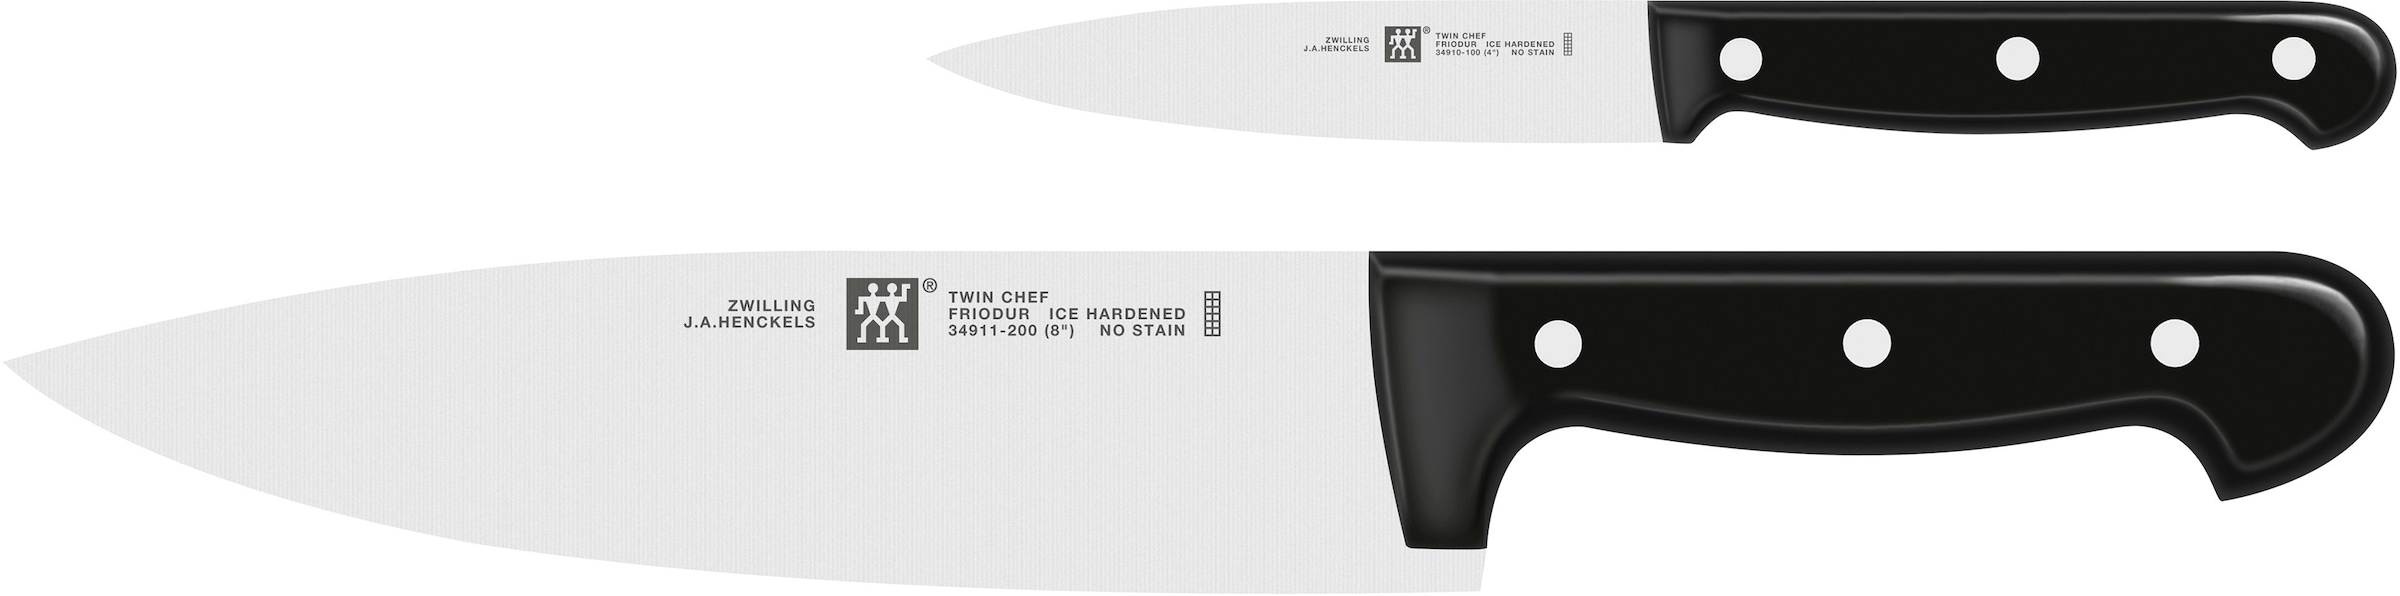 Zwilling Pfannen-Set »Shine/Twin Chef 2«, Aluminium, (Set, 4 tlg., je 1 Bratpfanne Ø 24/28 cm, 2-teiliges Kochmesser-Set), Induktion, Ø 20/24 cm, inkl. 2-teiligem Kochmesser-Set